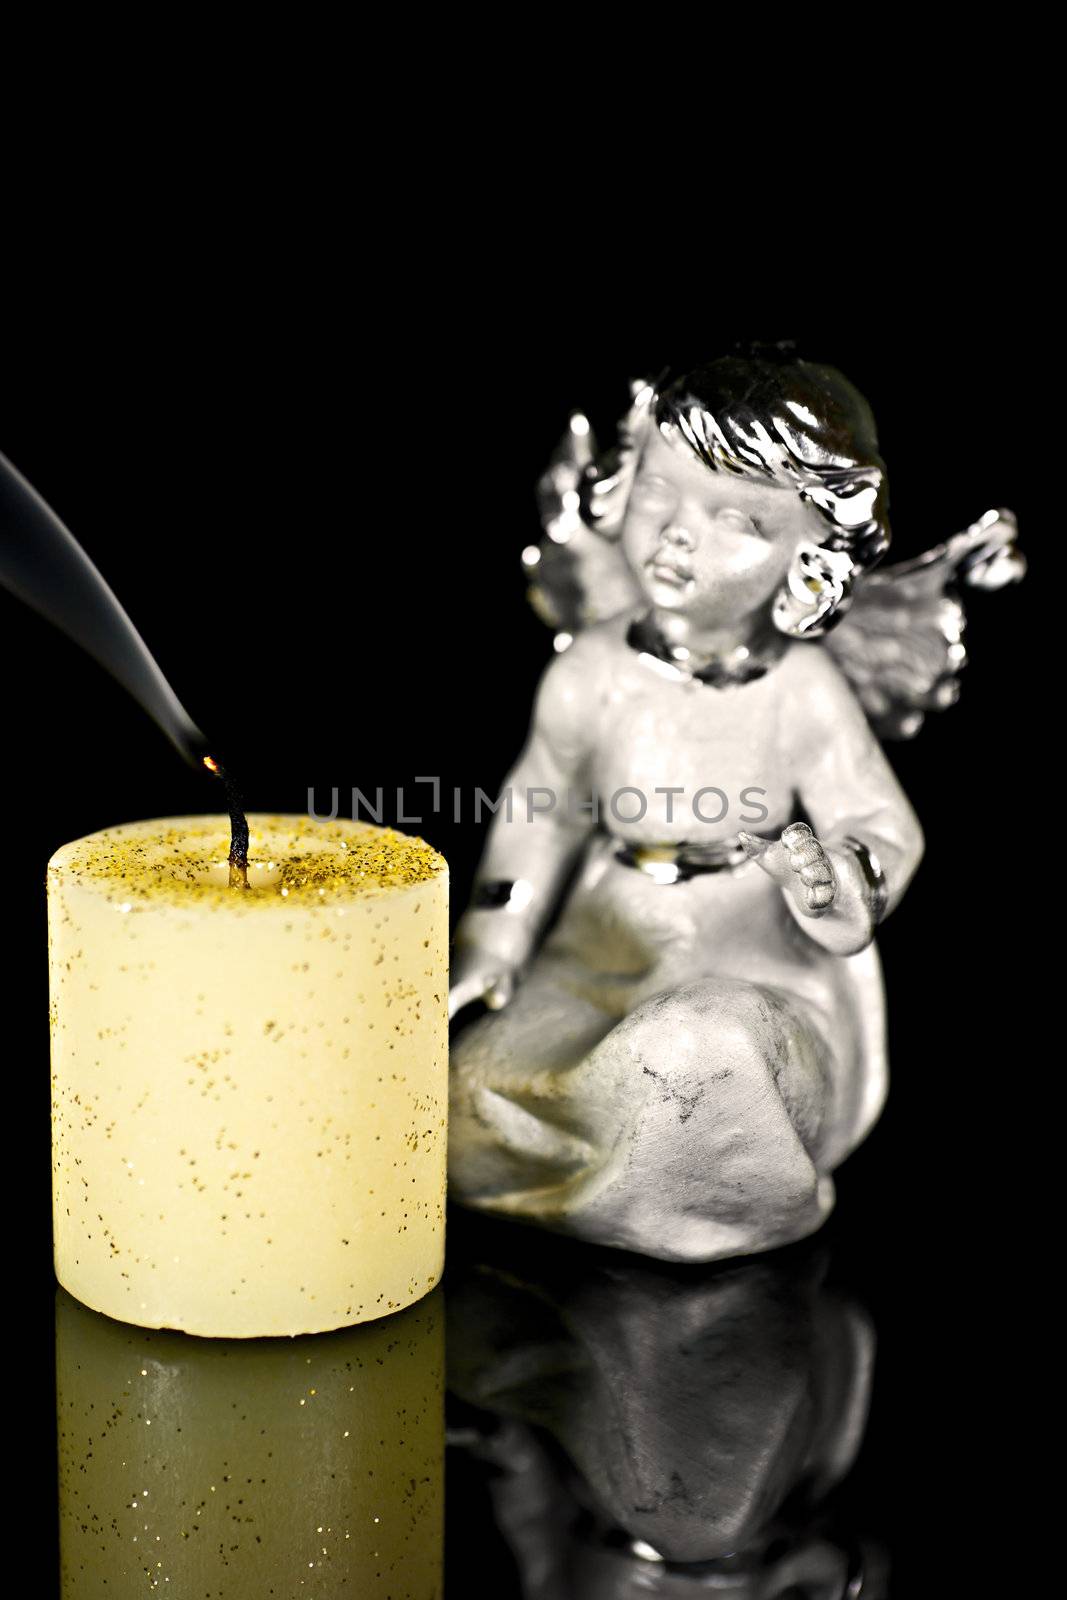 Extinguished candle. by gitusik